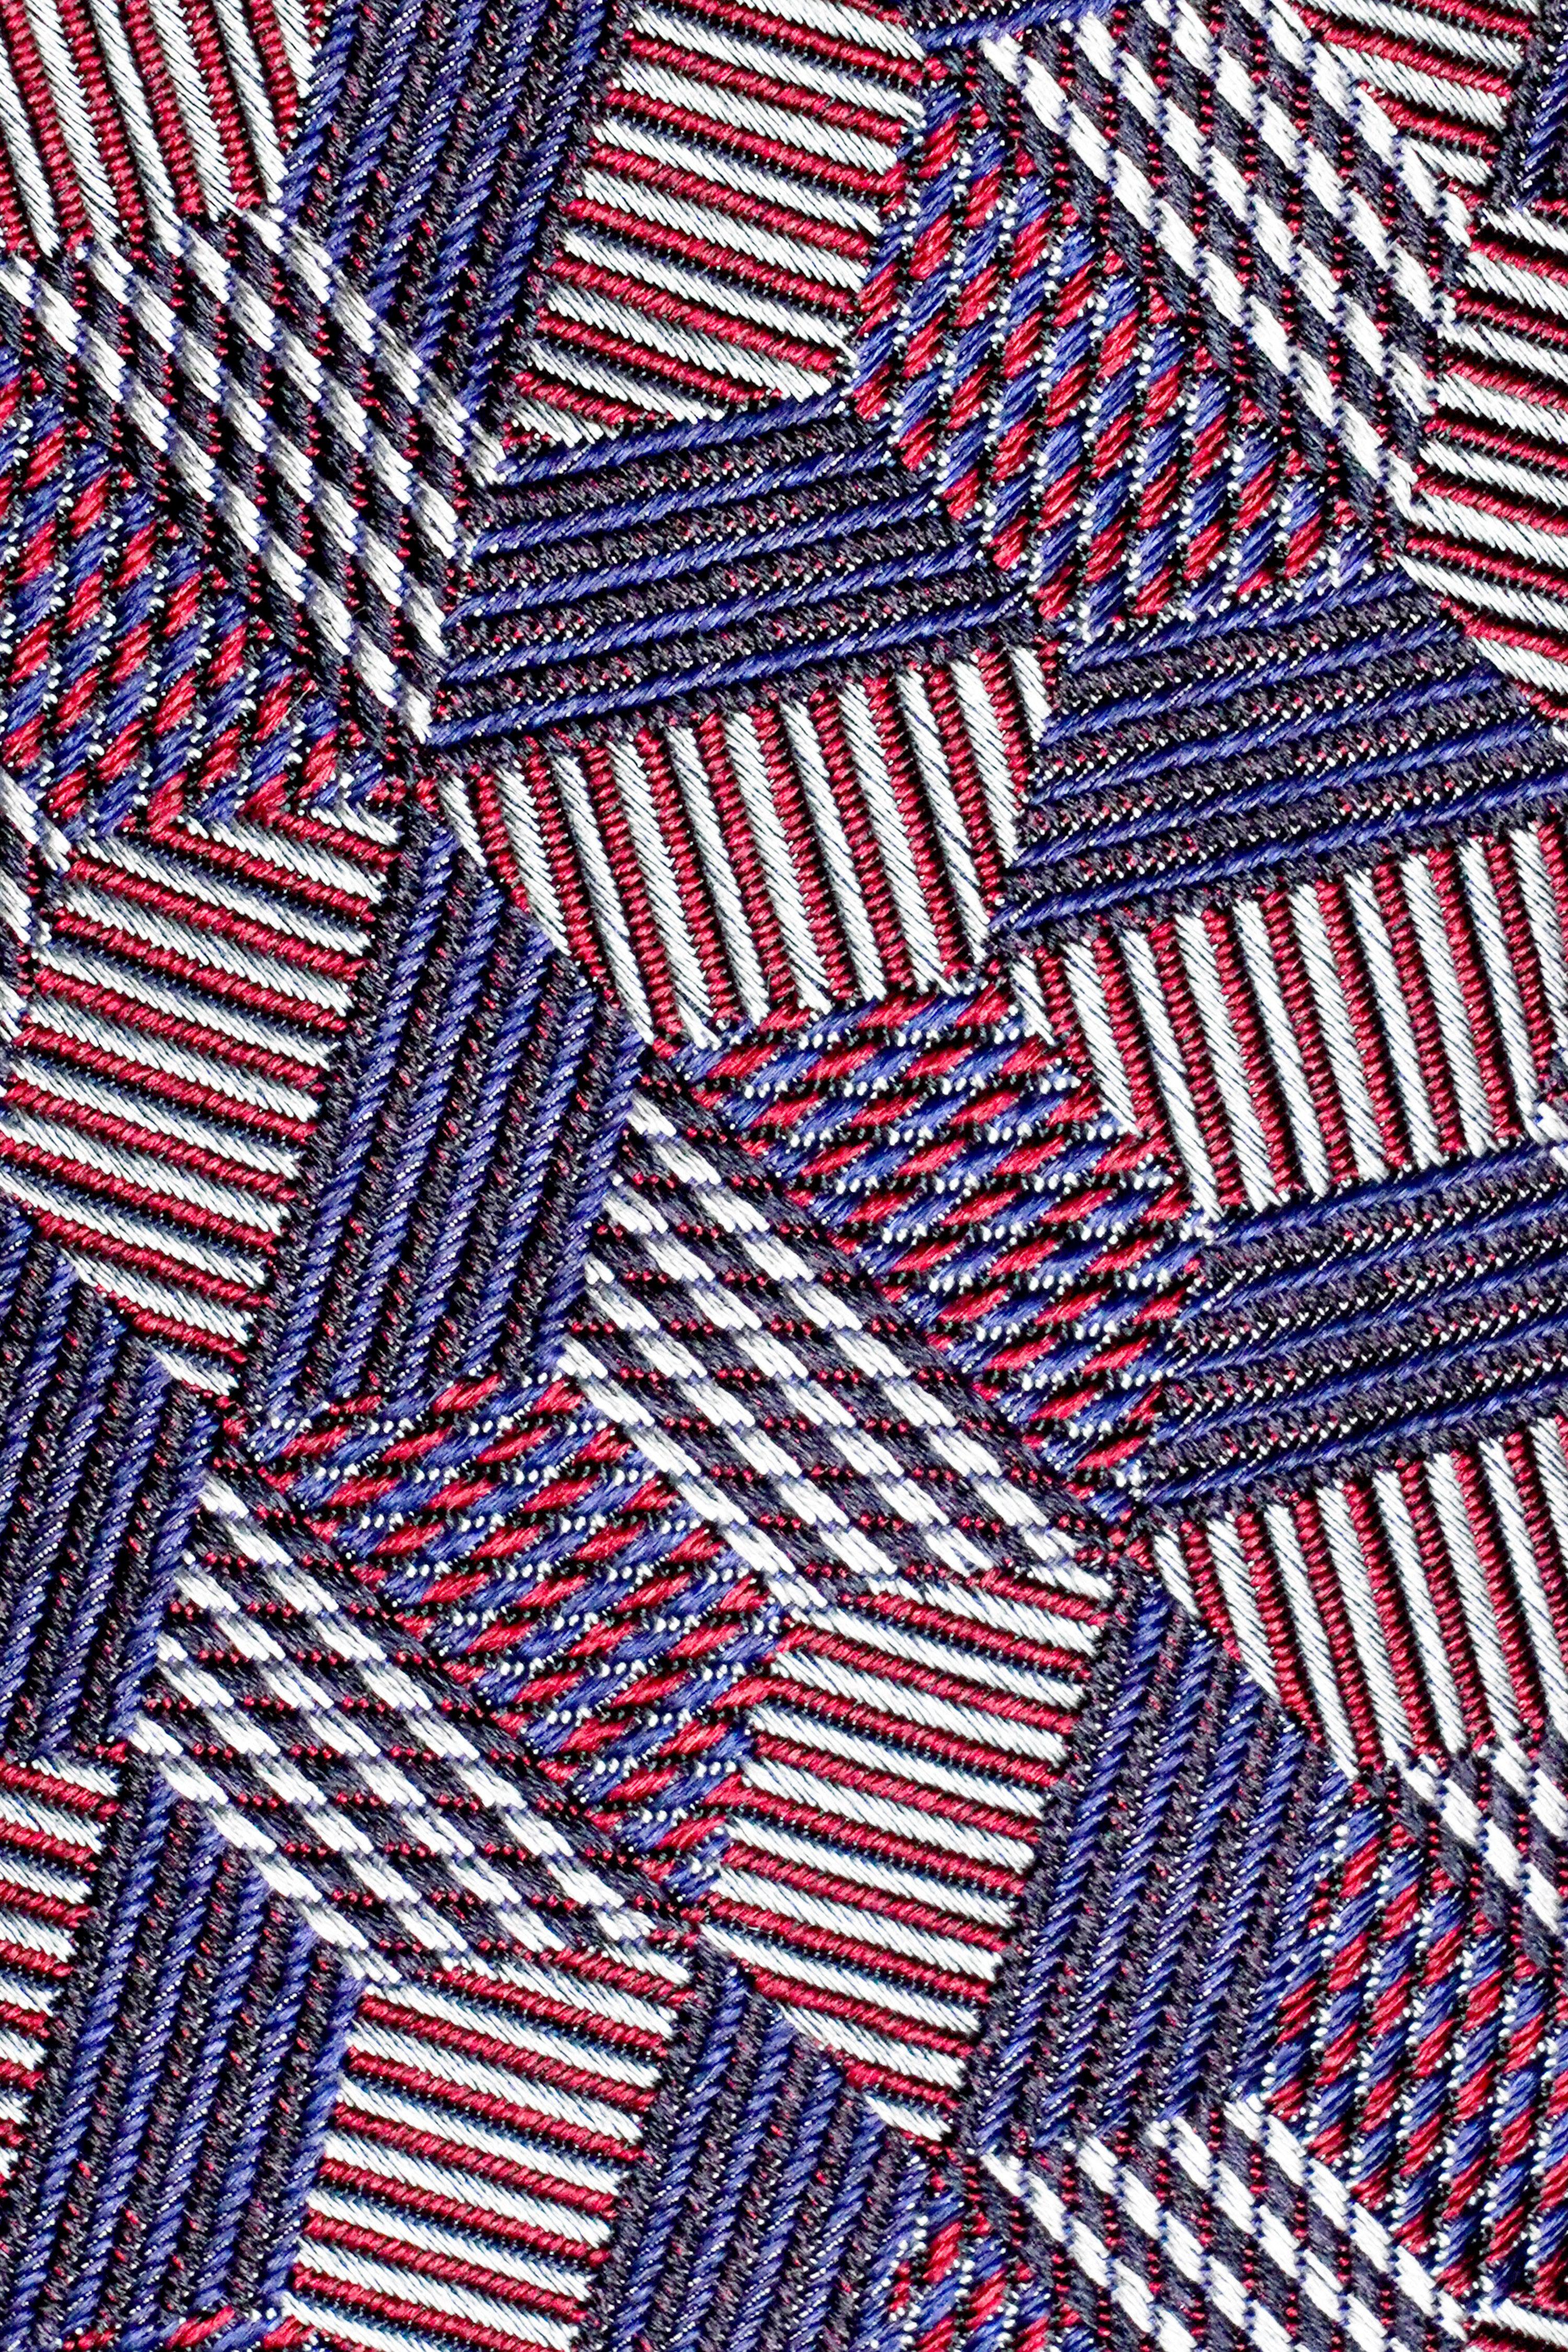 Alt view 1 Holton Weave Tie in Purple